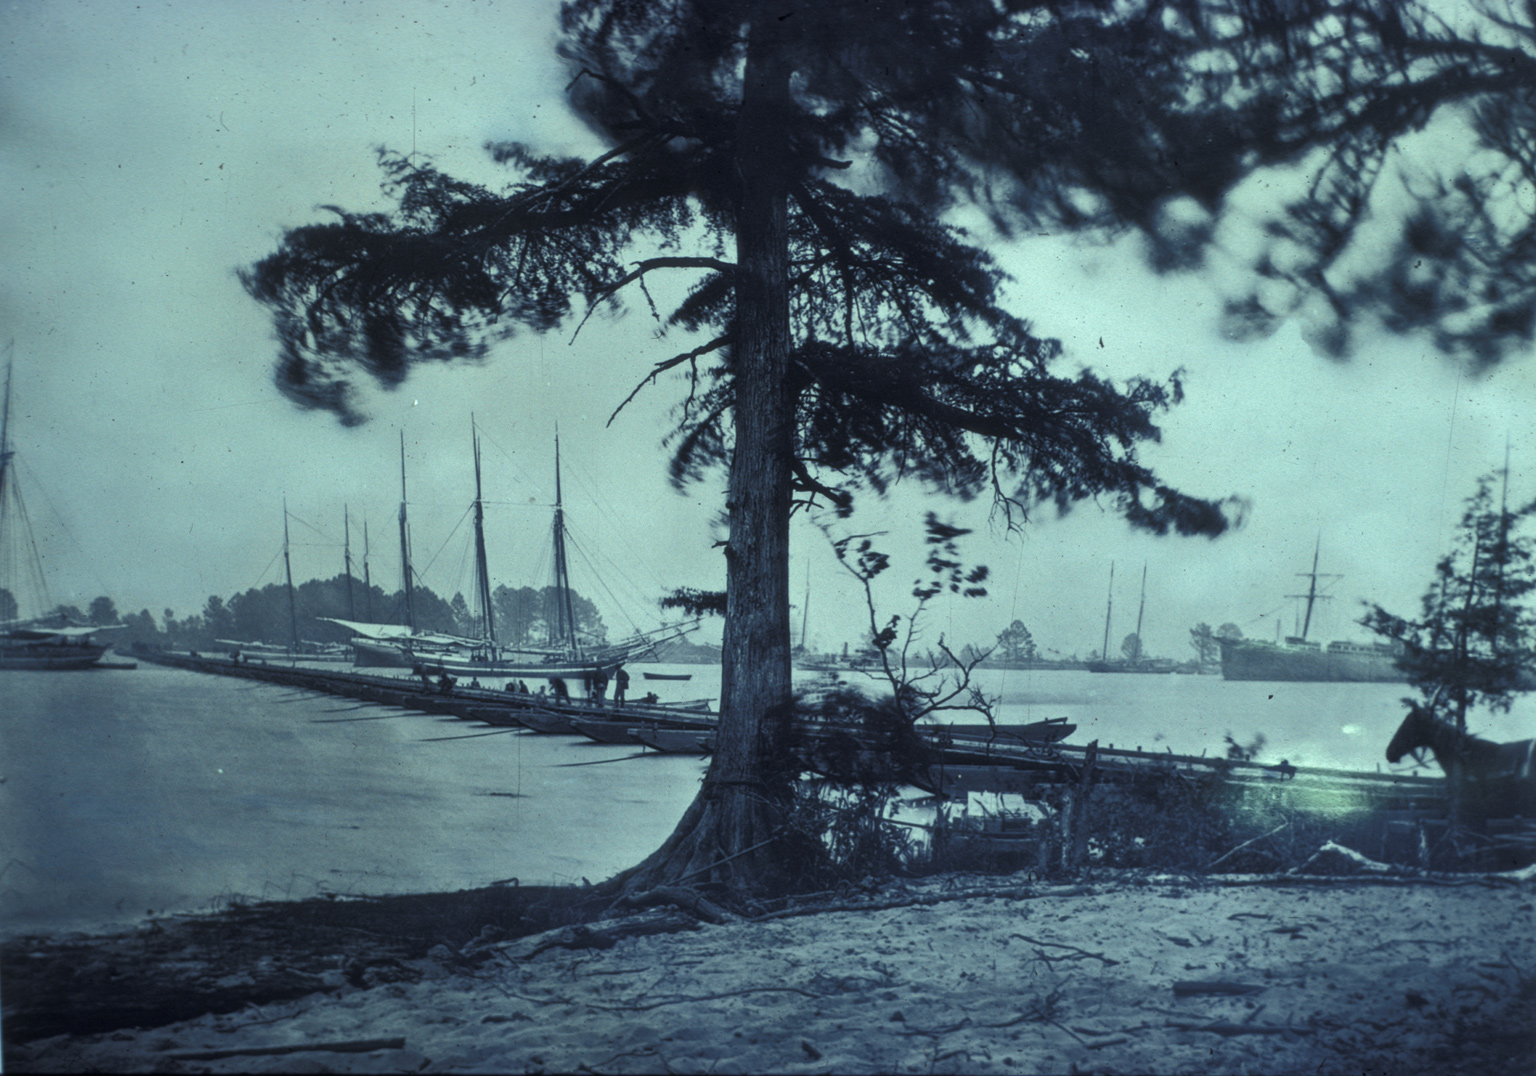 Union Army's pontoon bridge, black and white image